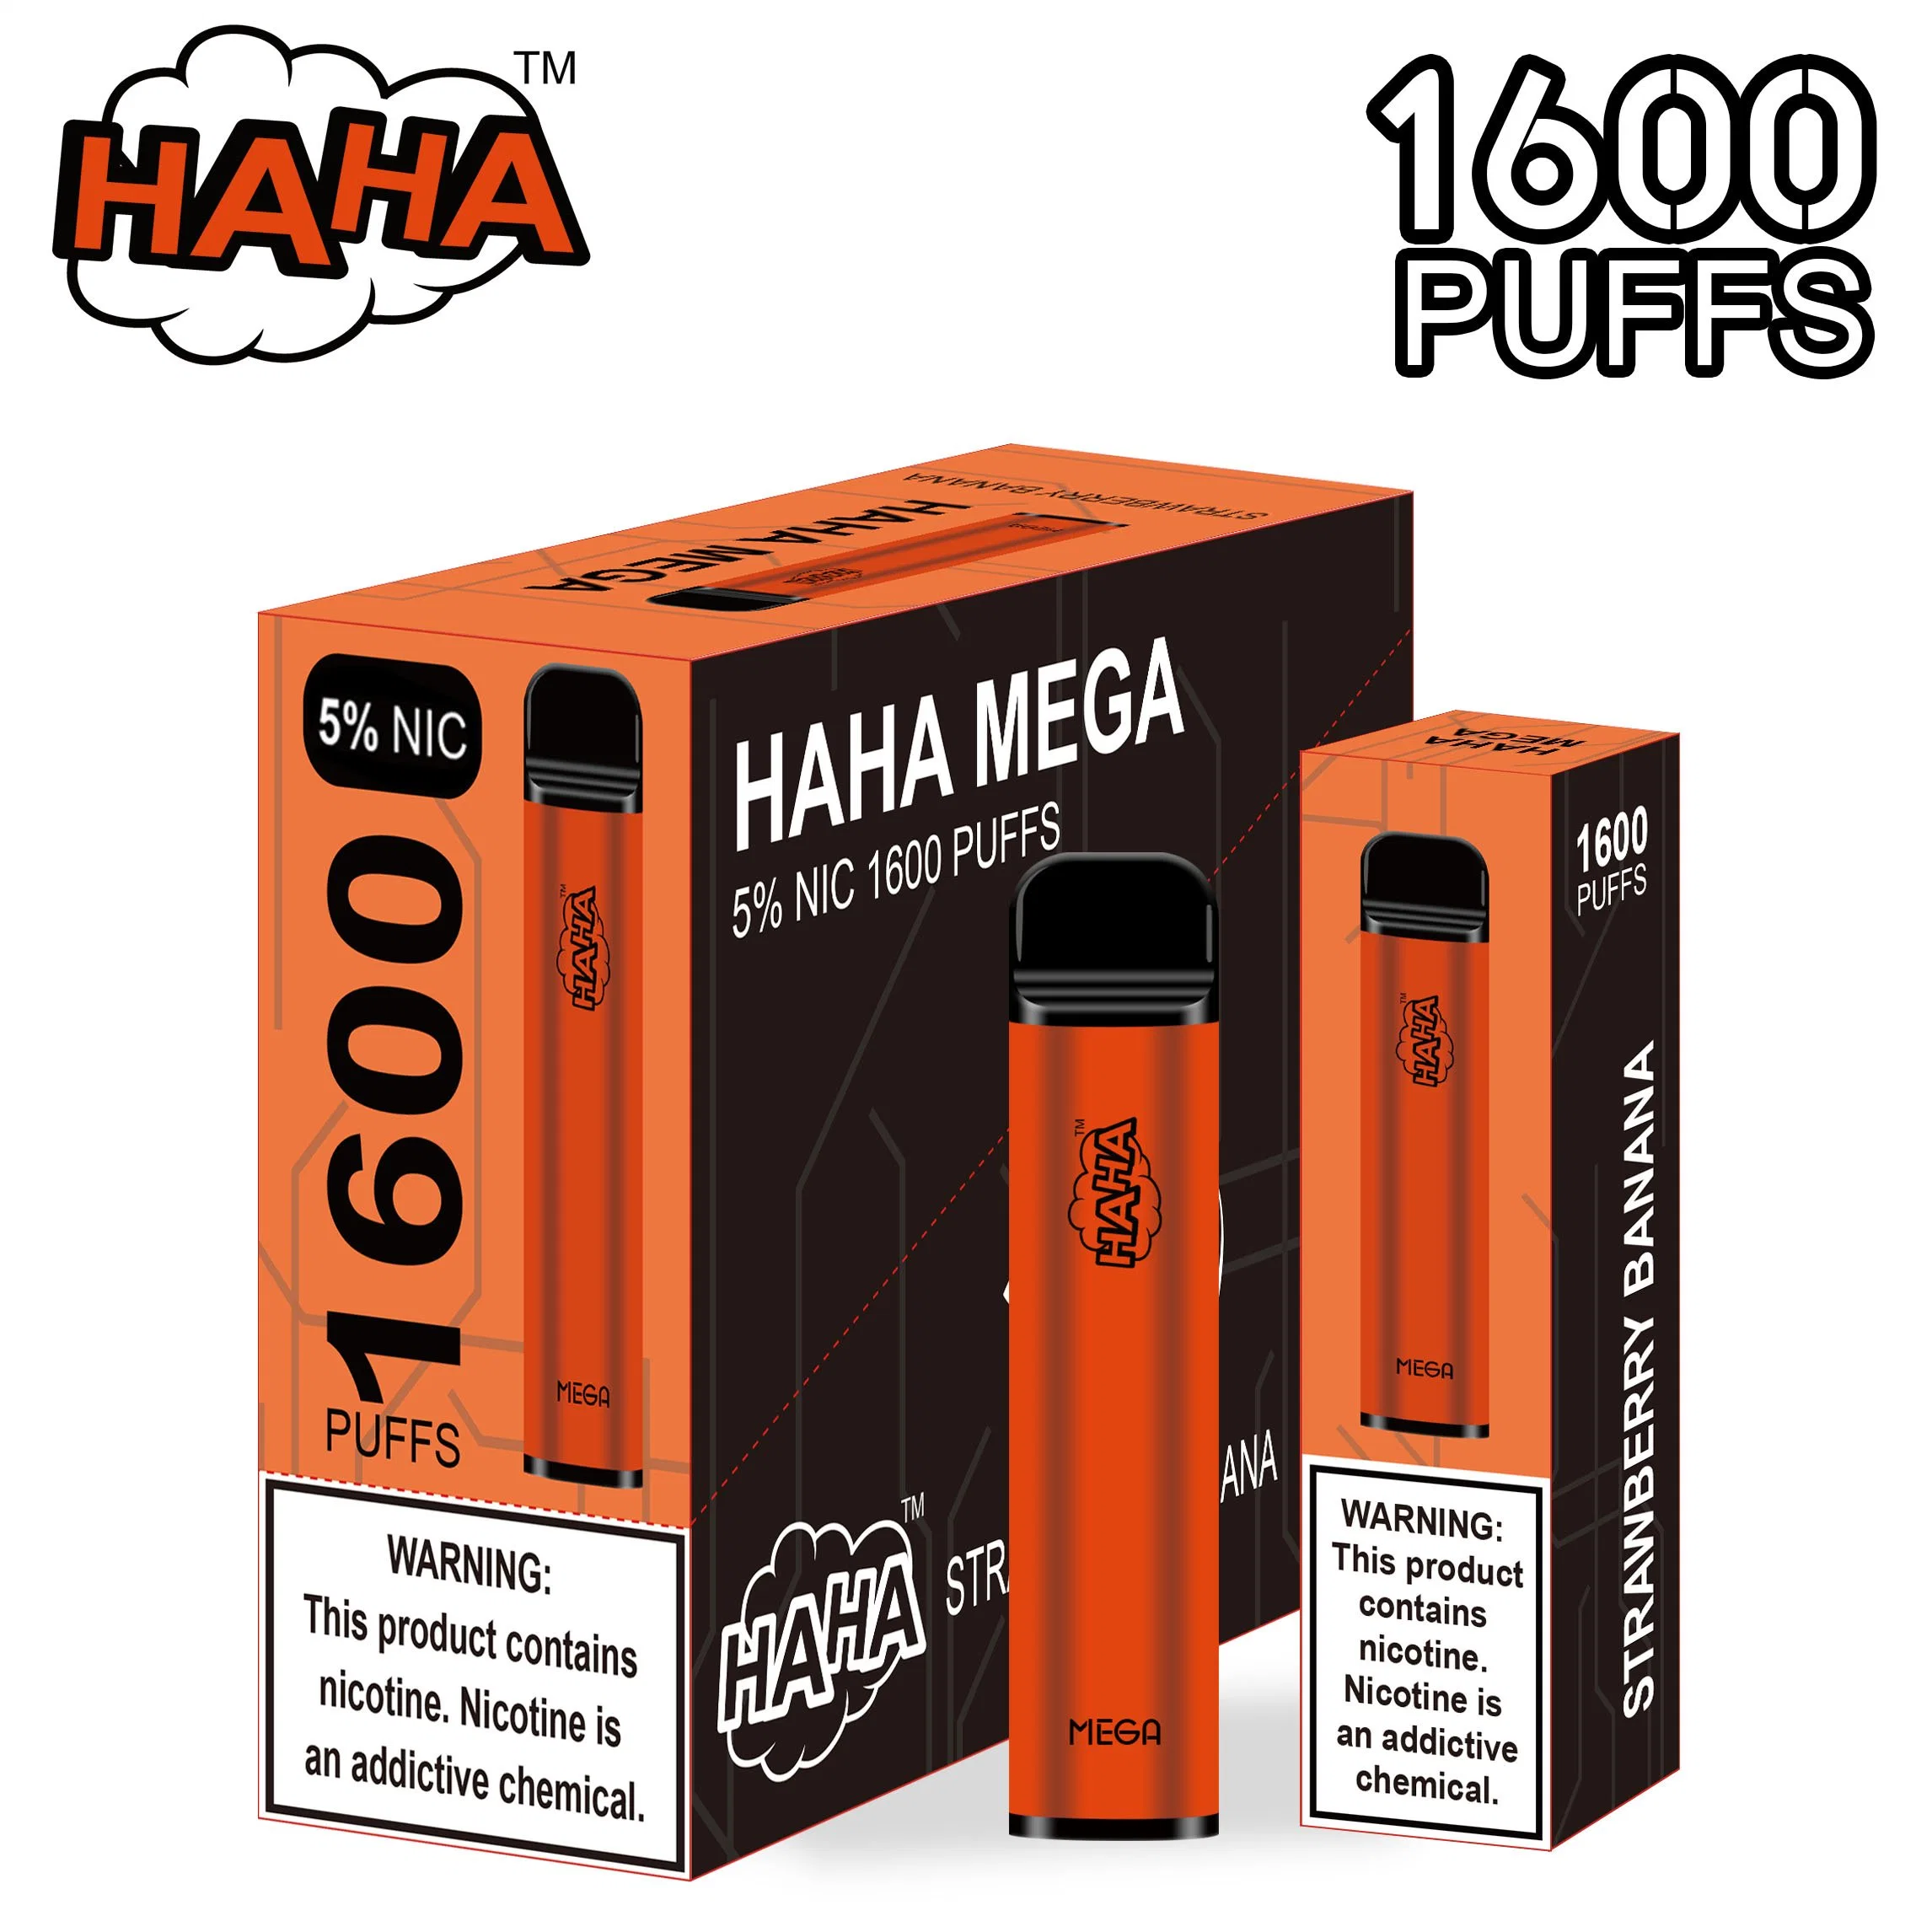 Aokit 1600 مأكس Haha ميجا التدخين Vape يمكن التخلص منه السجائر المصنعة للمعدات الأصلية متوفر